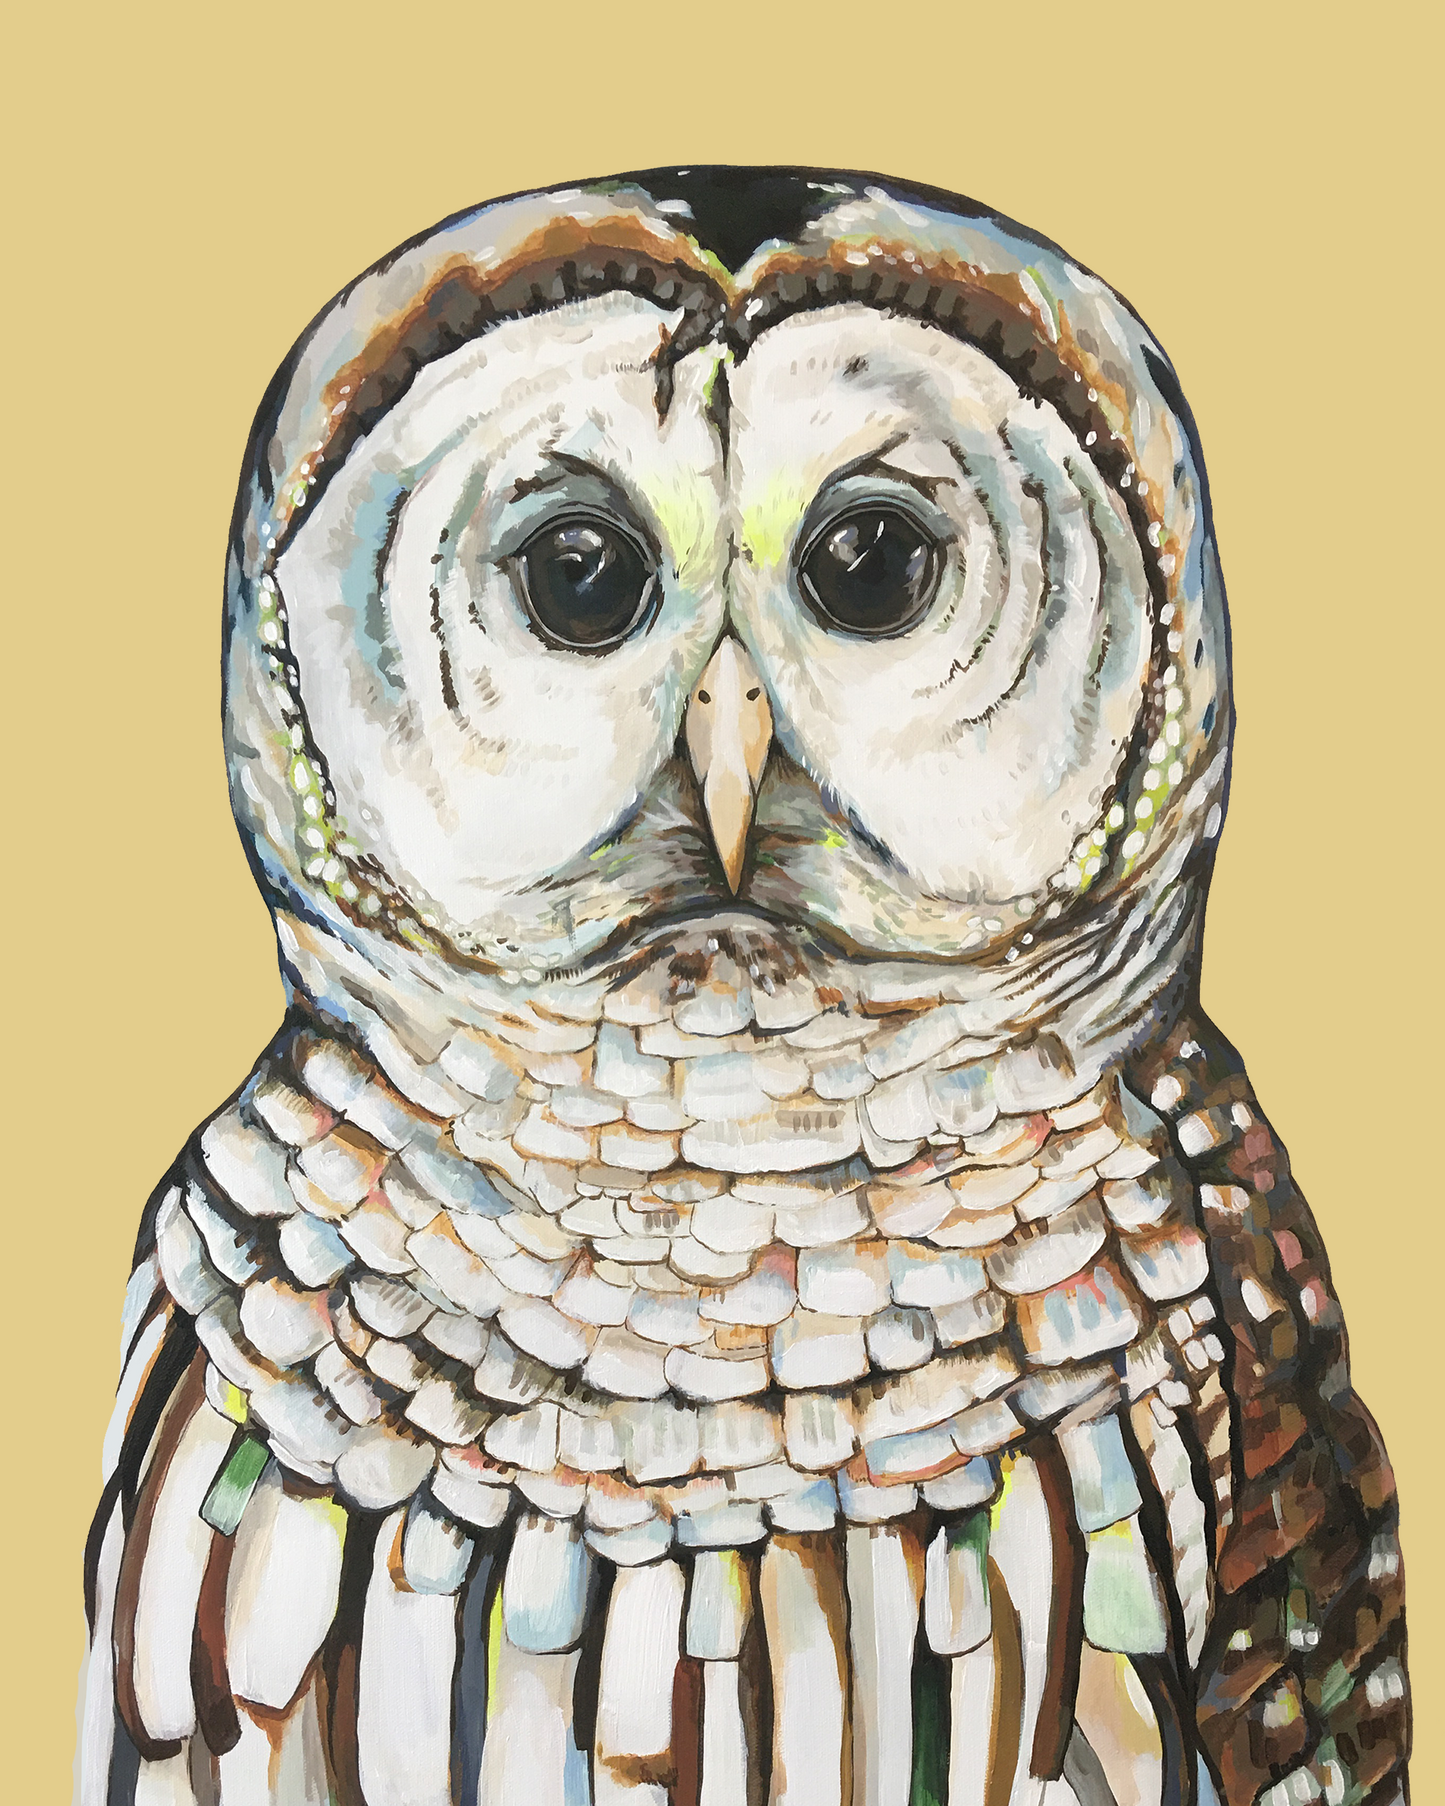 Al the Owl